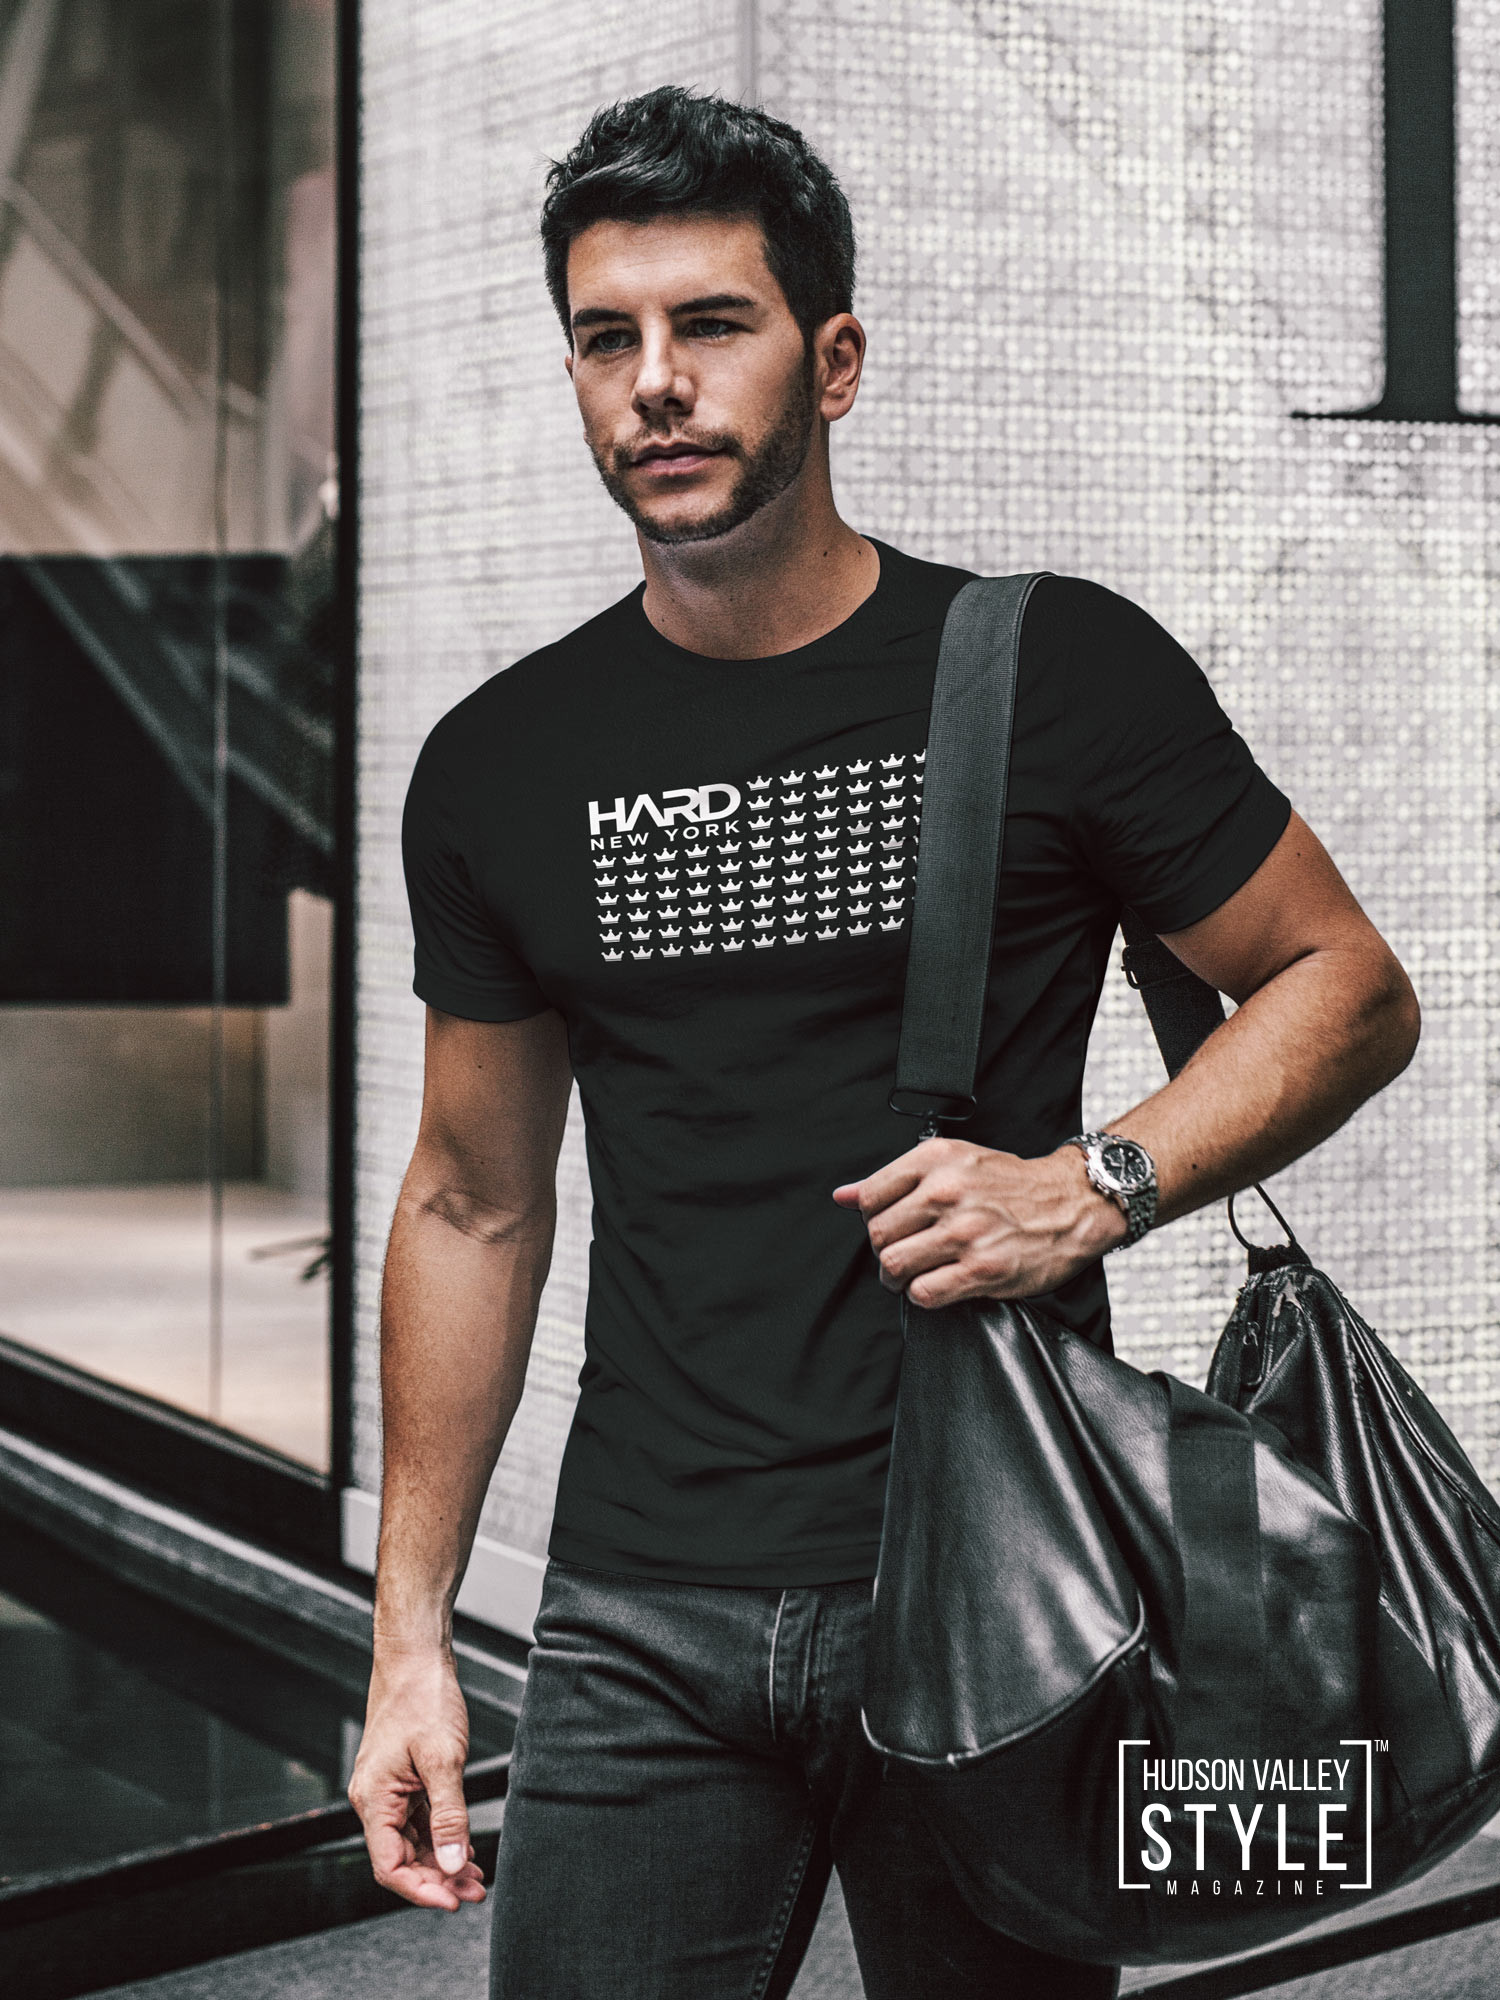 HARD NEW YORK Designer Men's Apparel - T-shirts, débardeurs, sous-vêtements, sacs